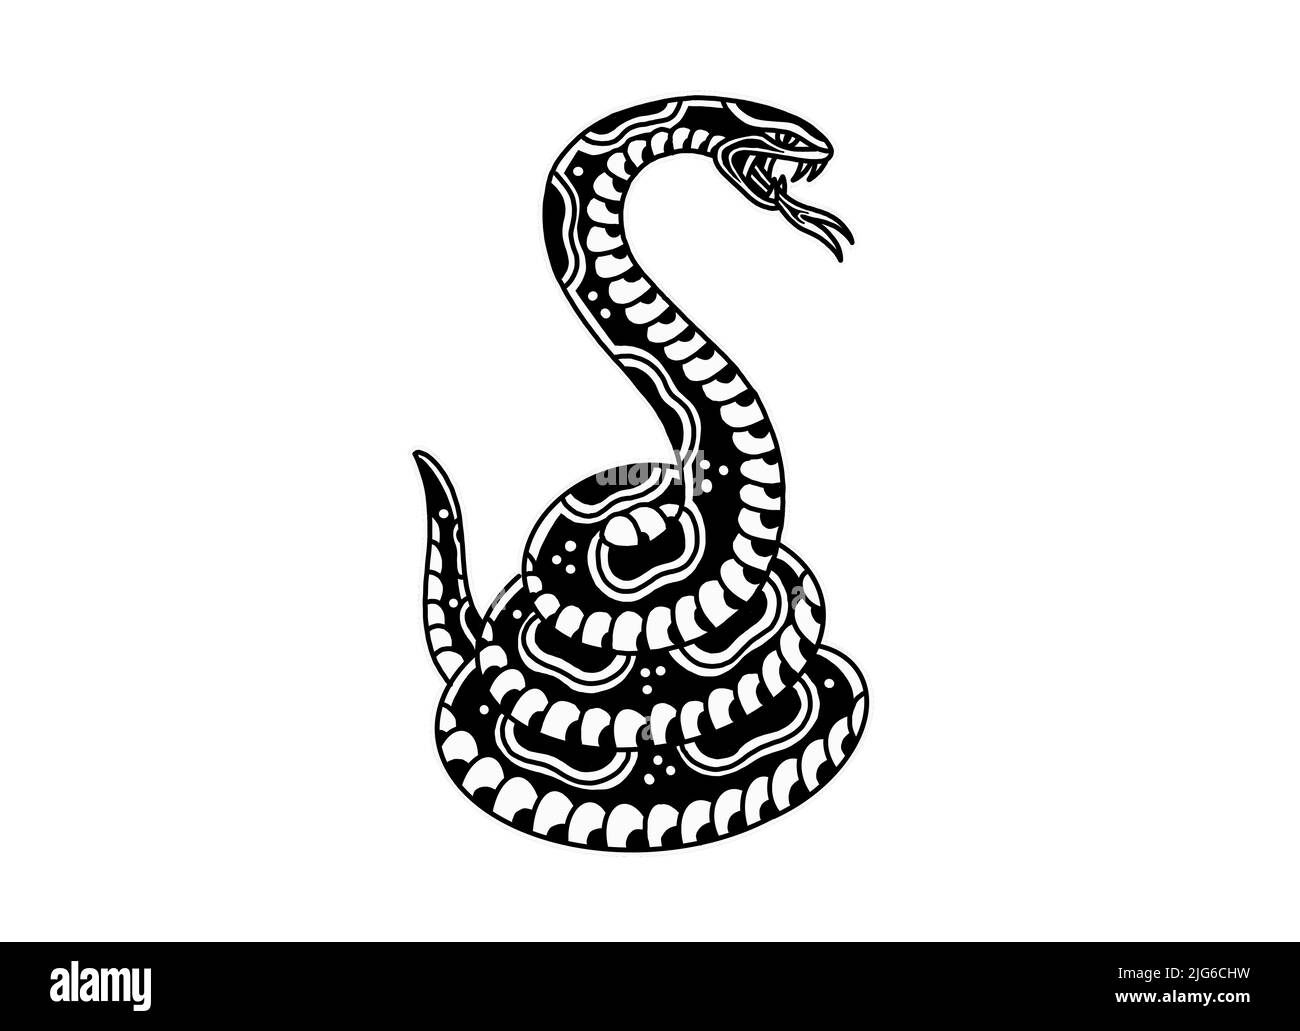 Old school tattoo design graphic snake Stock Photo